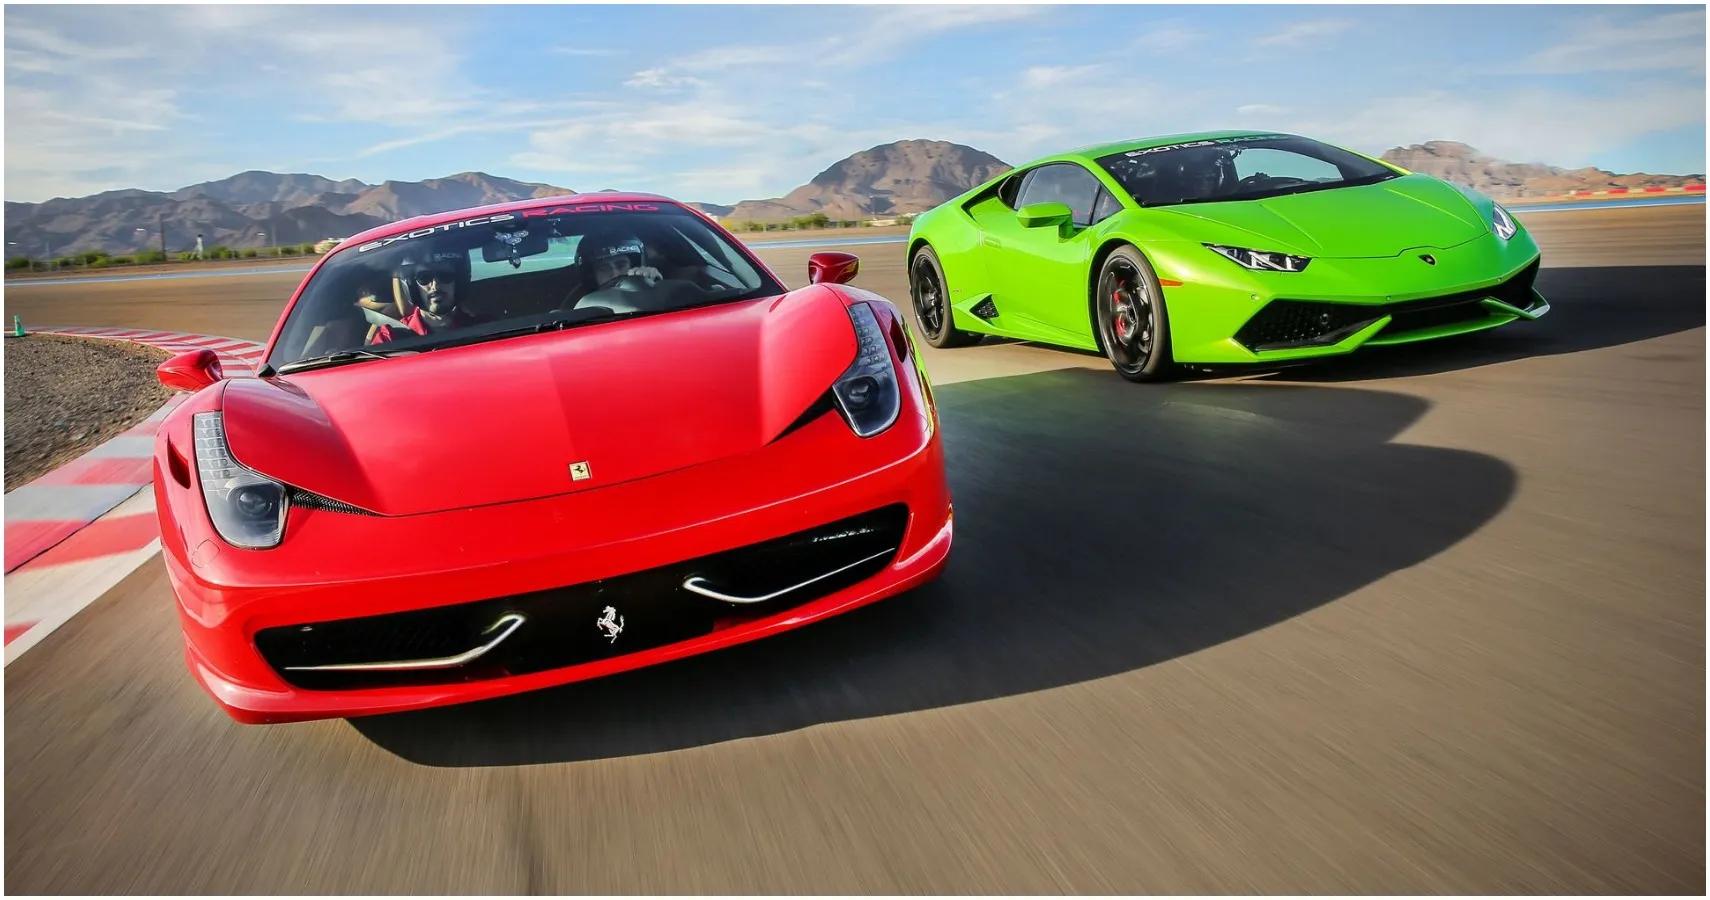 fastest lamborghini vs fastest ferrari - What is the speed of Lamborghini and Ferrari